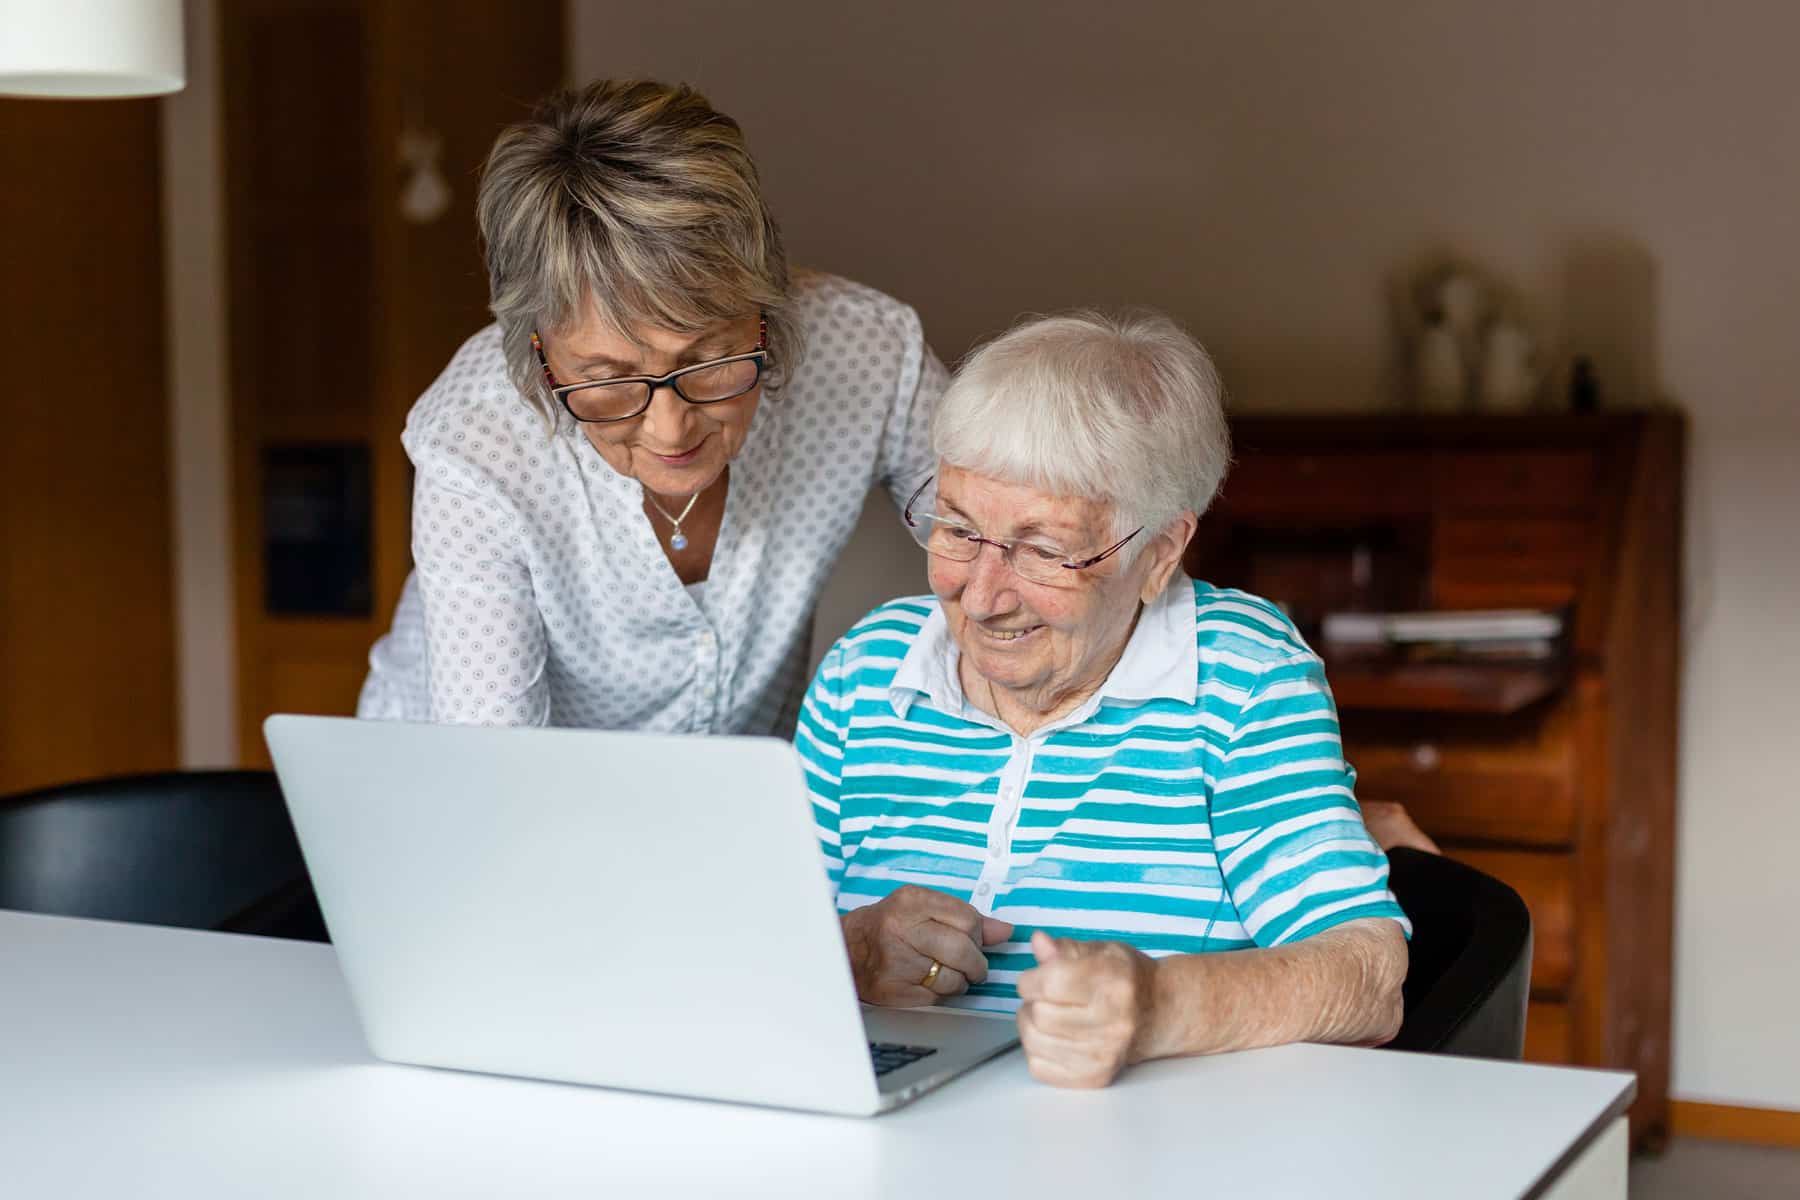 LebensGroß Begleiterin zeigt älterer Frau den Umgang mit einem Laptop